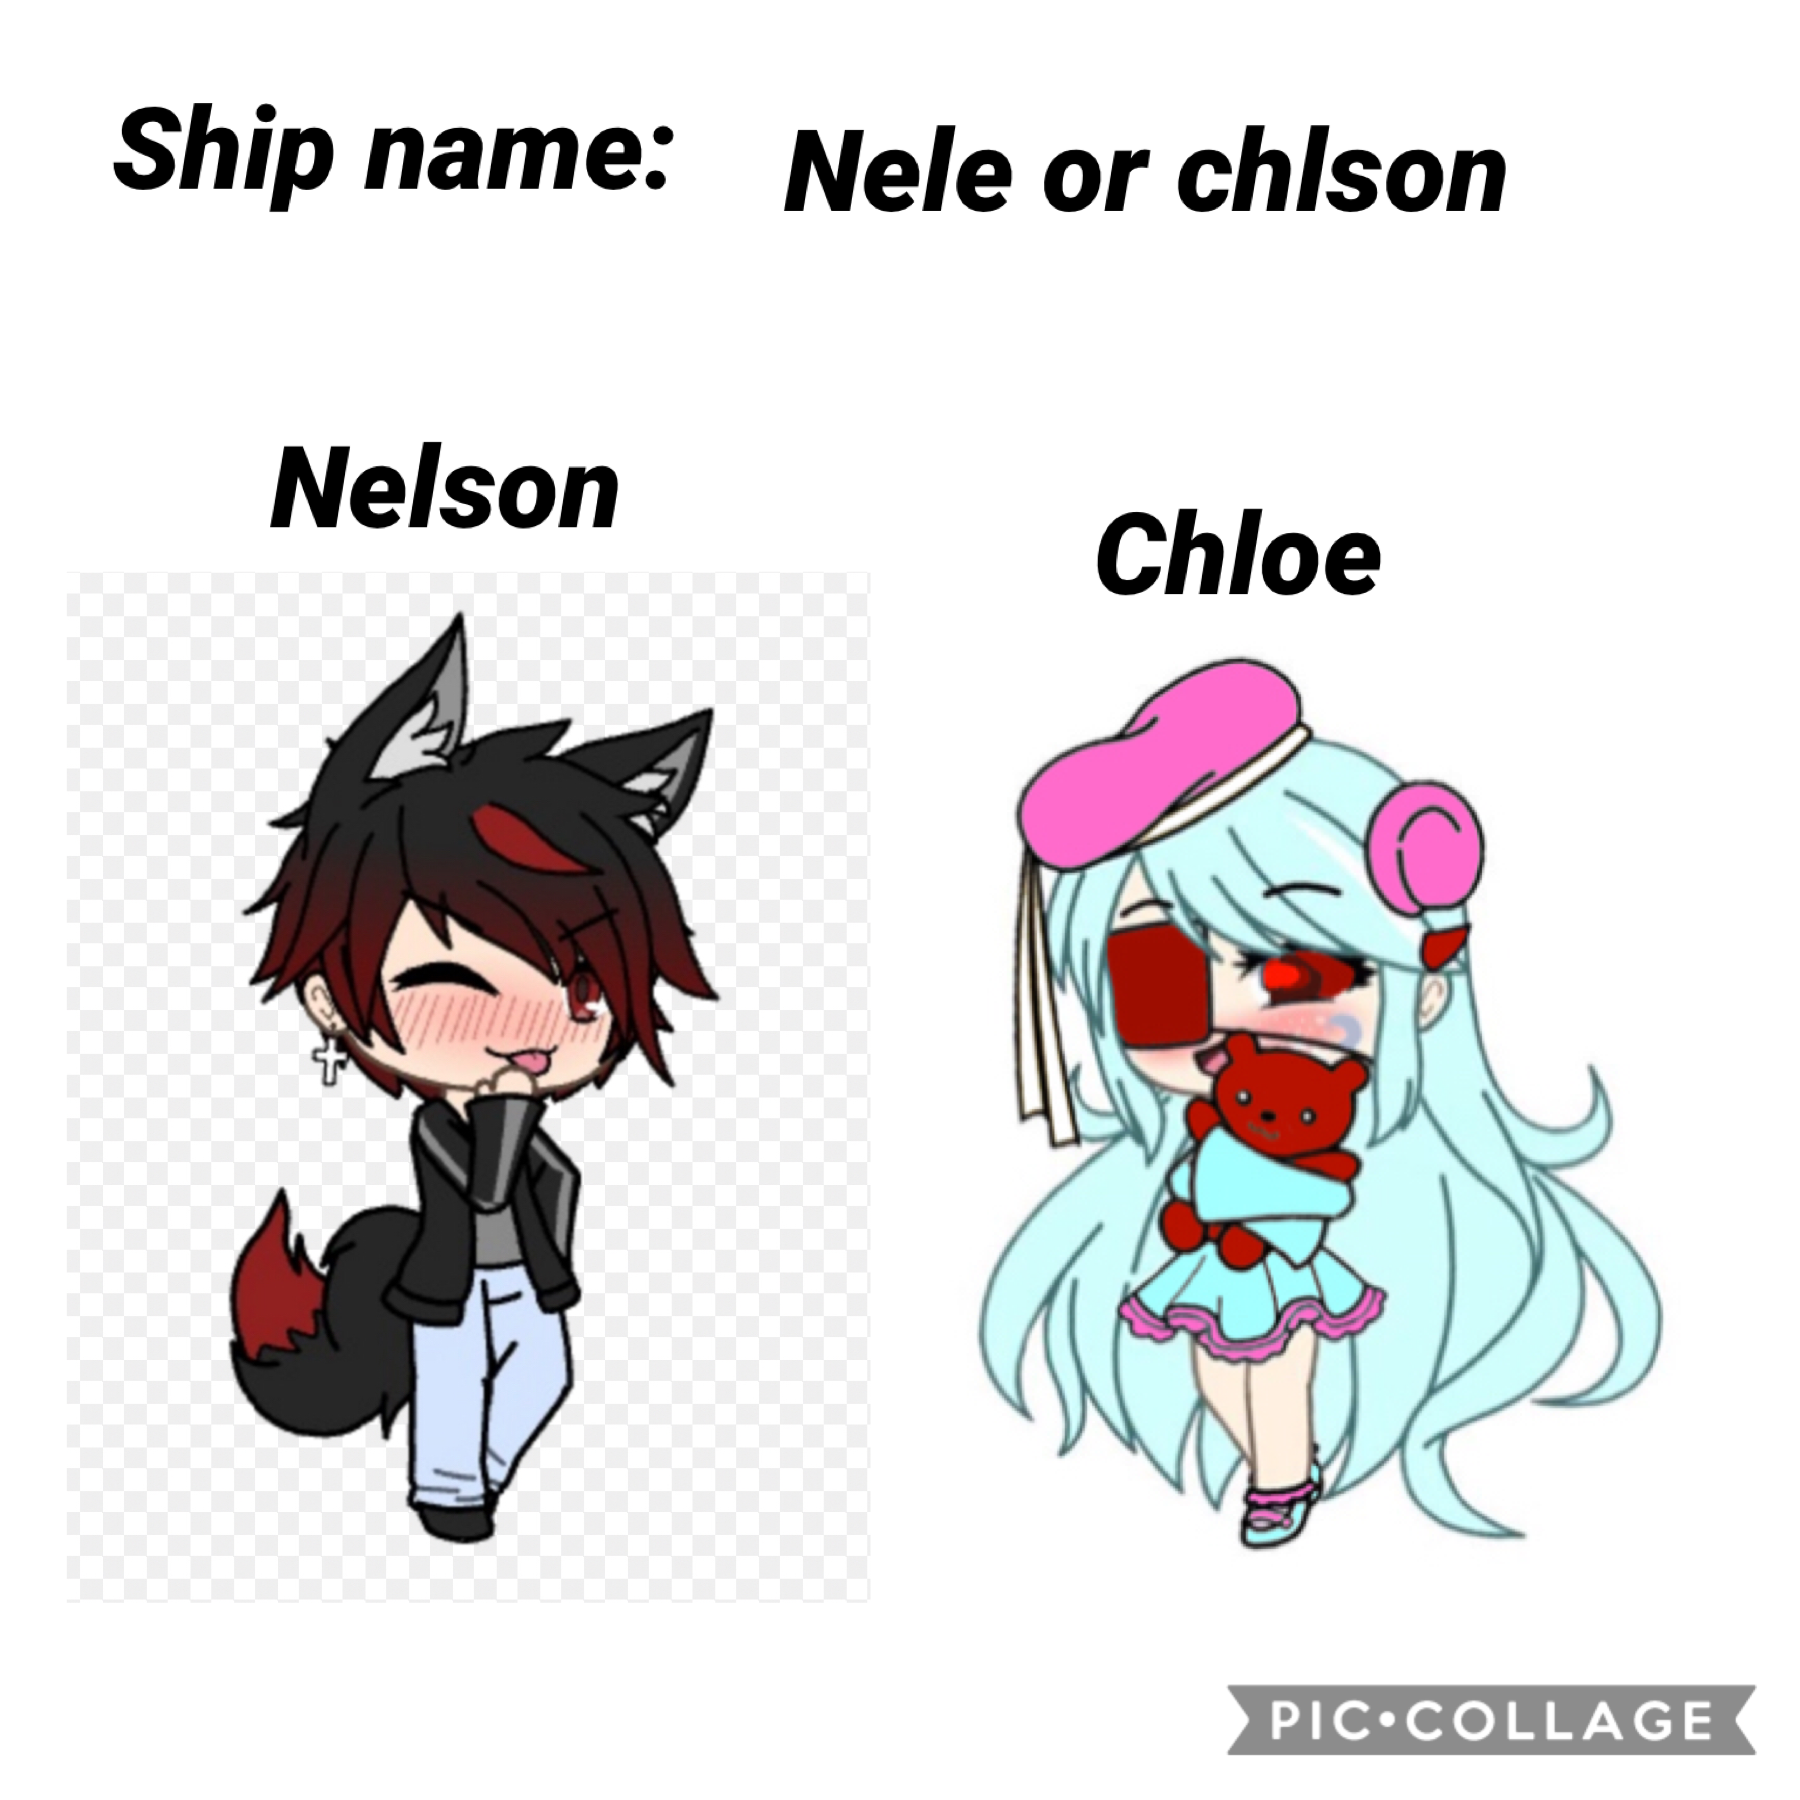 Chloe’s adorable 